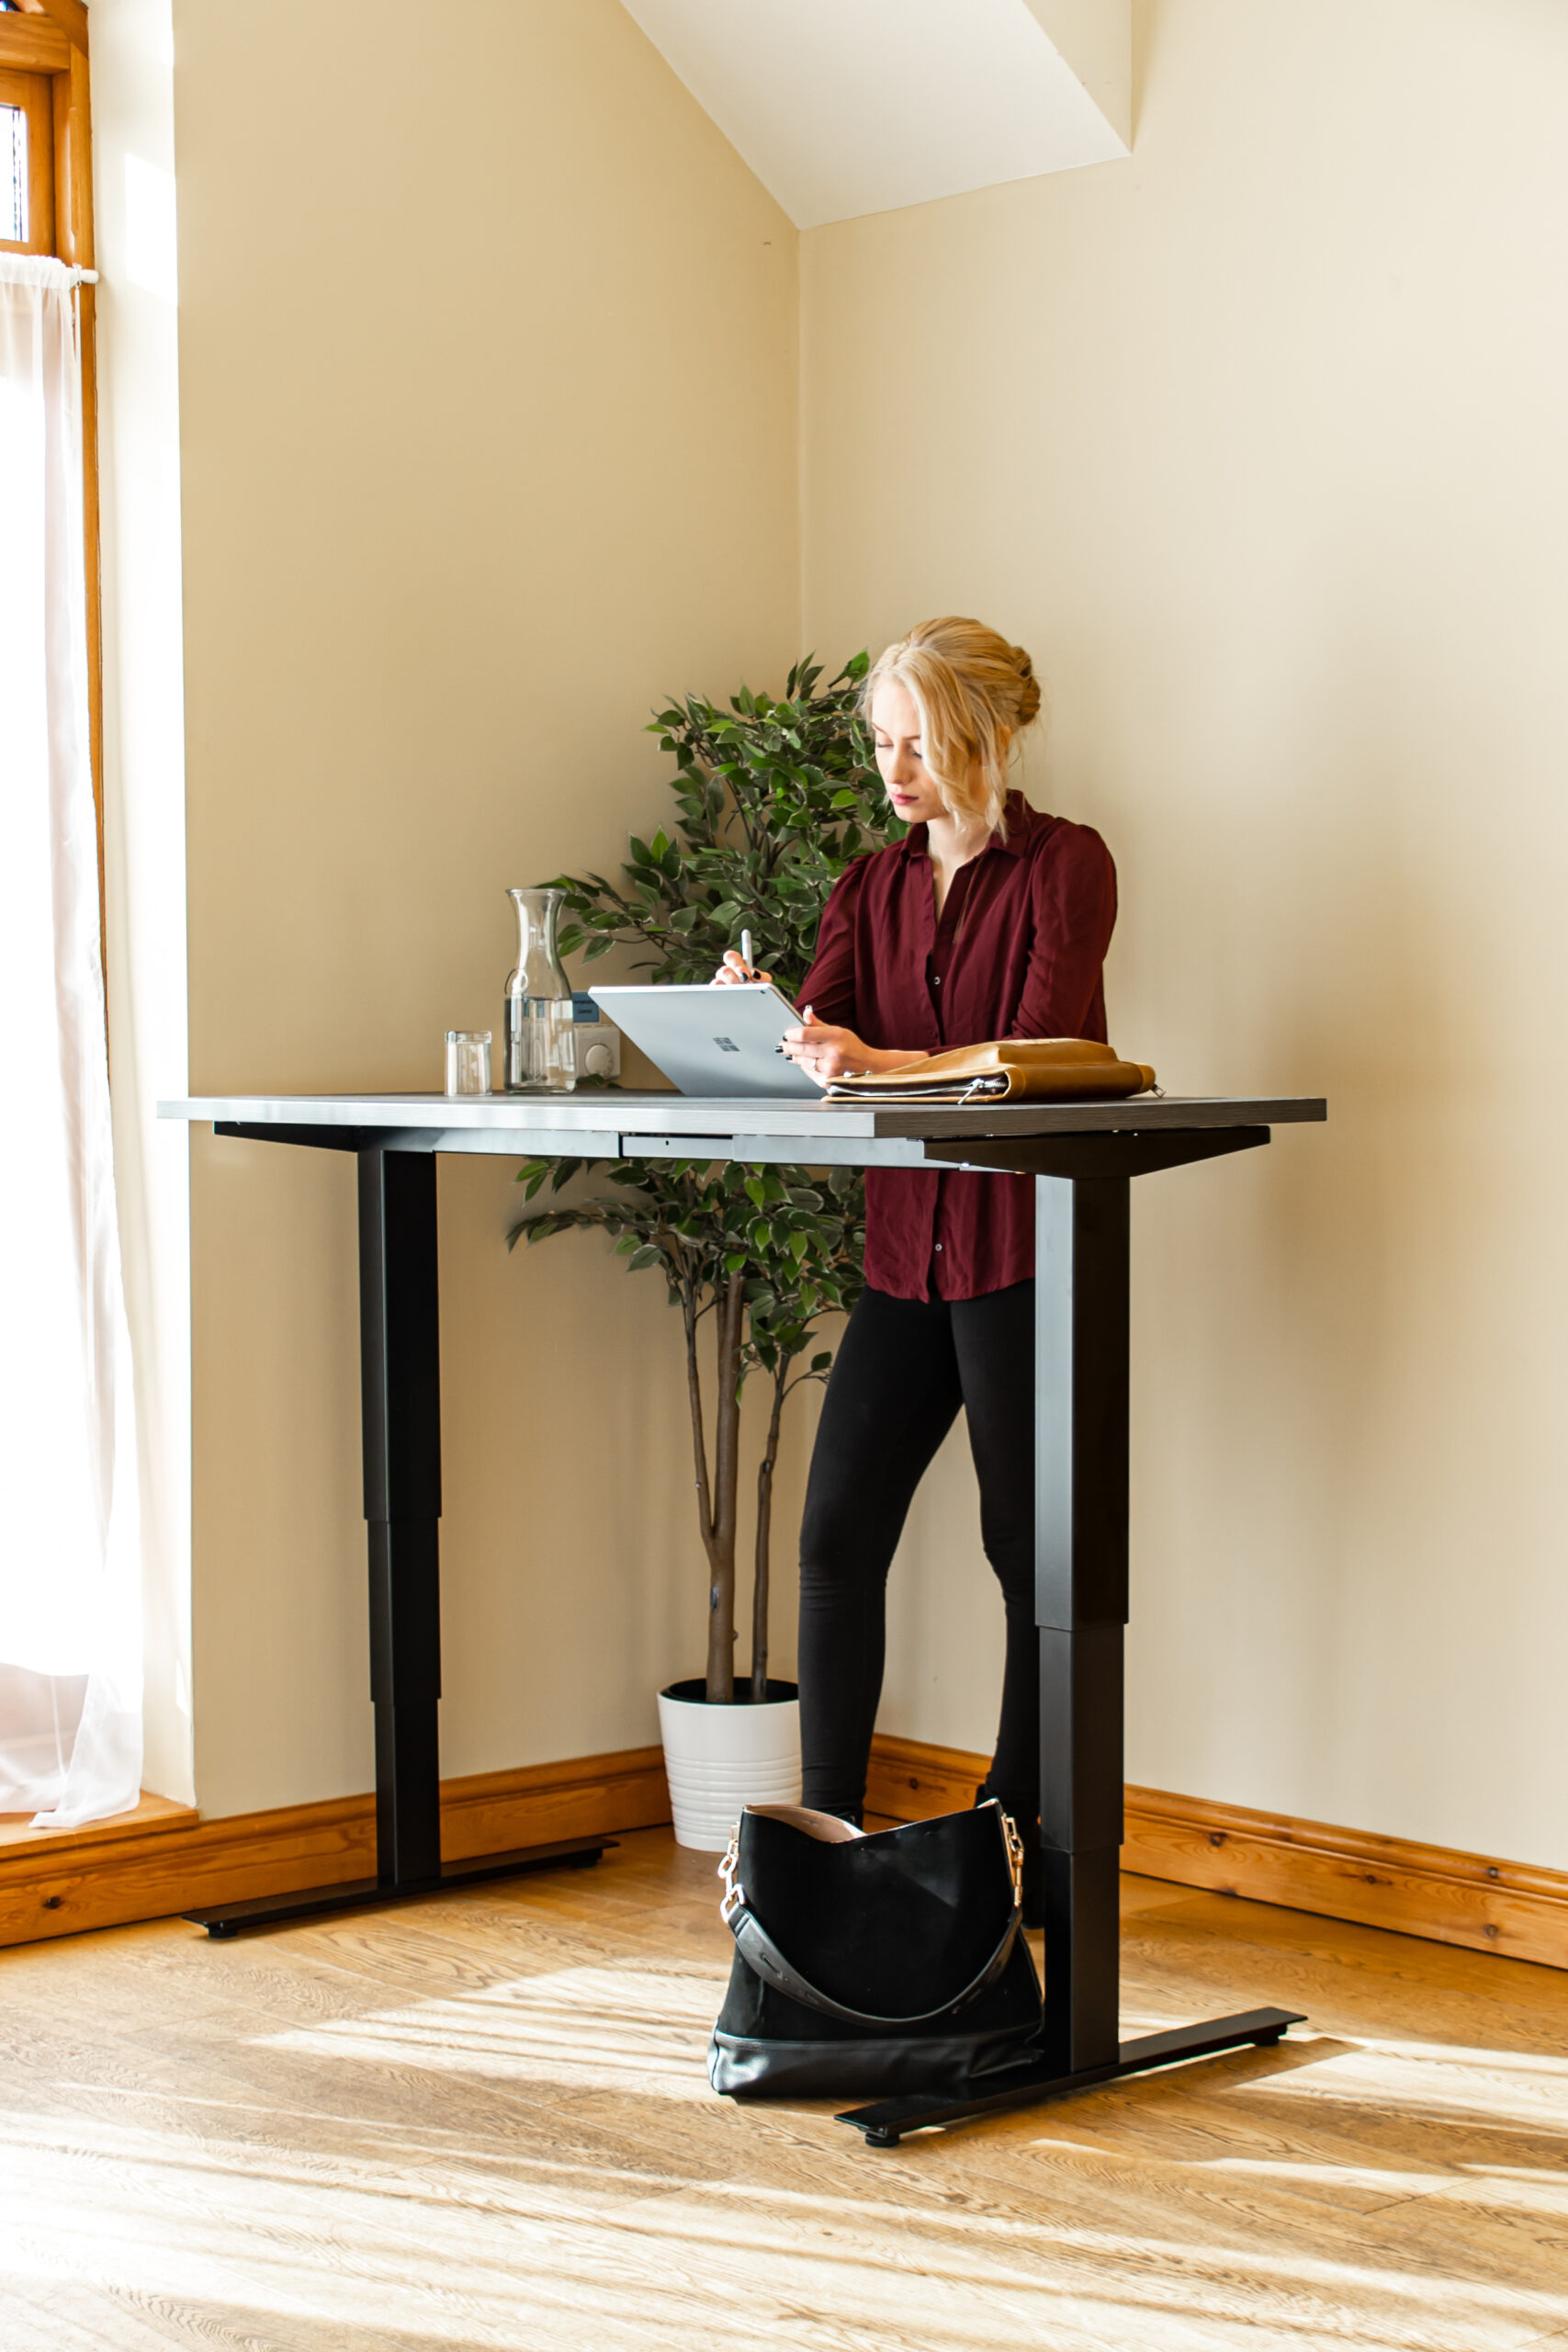 Advance Desk - Height Adjustable Desk By Lavoro Design